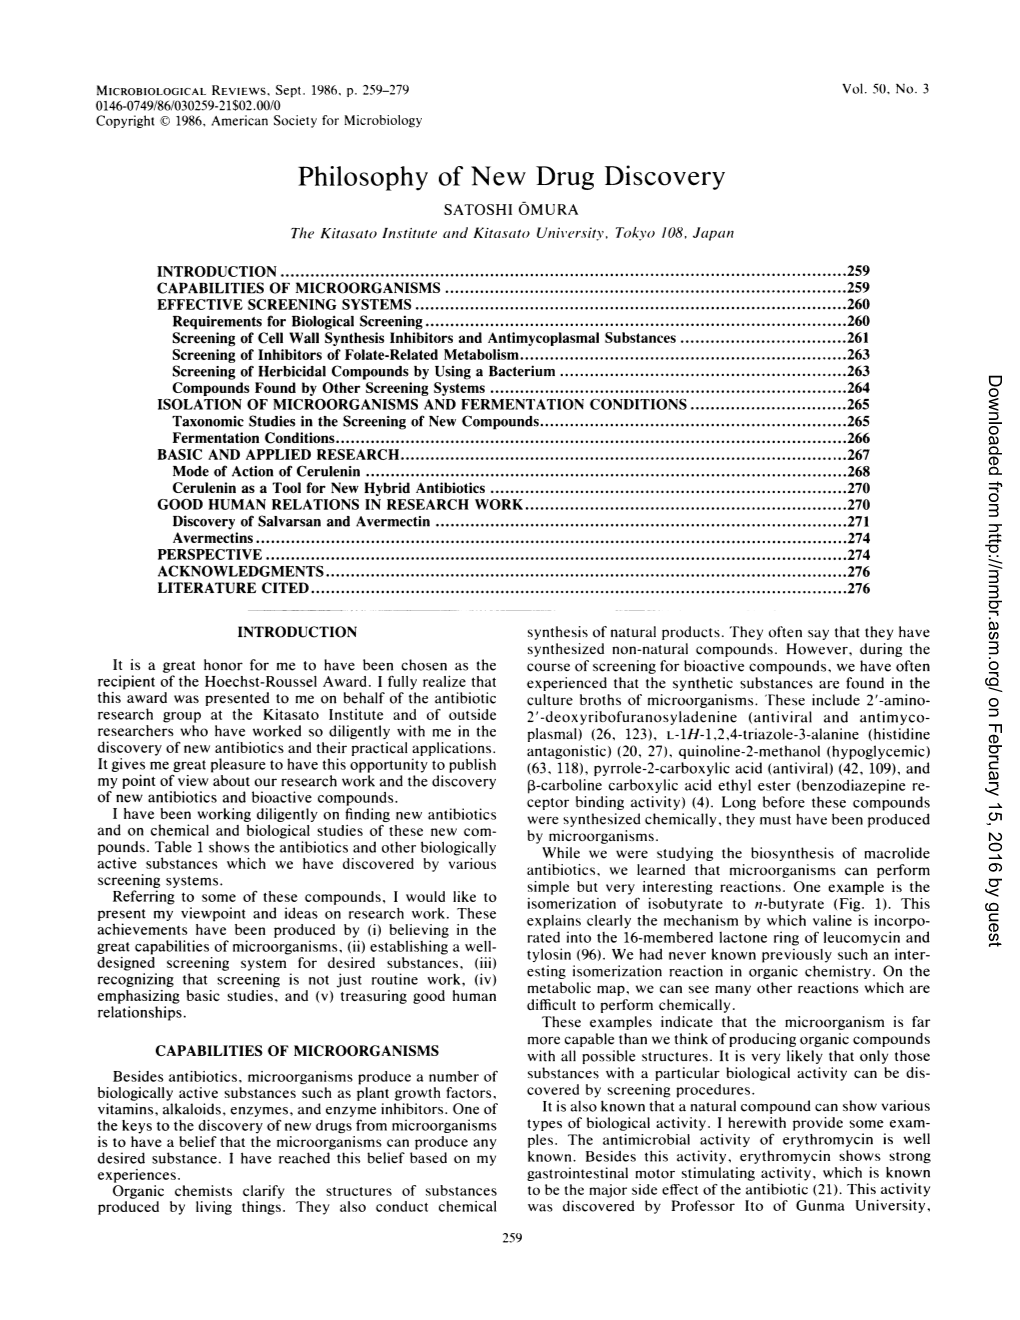 Philosophy of New Drug Discovery SATOSHI OMURA the Kitasato Institiute and Kita.Sato Universitv, Tokyo 108, Japan